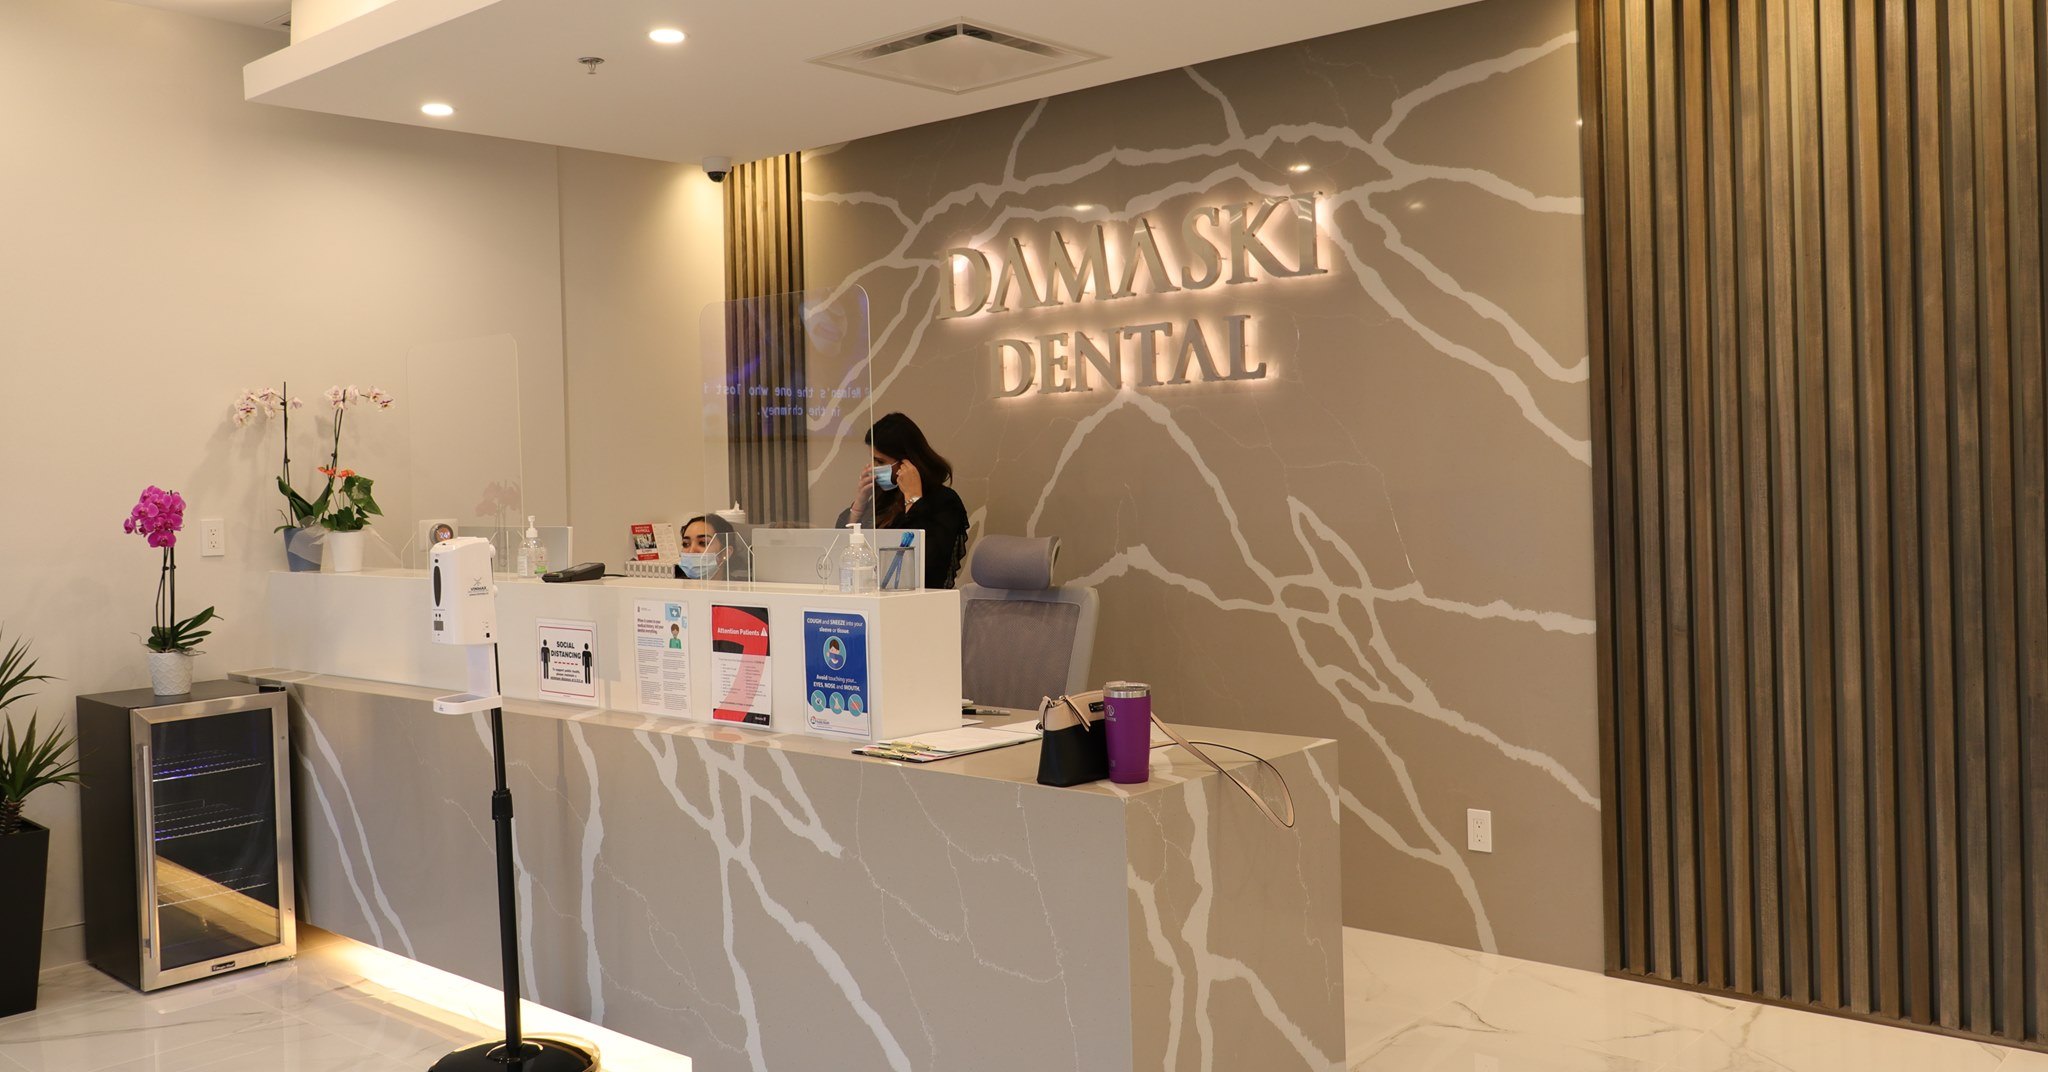 Damaski Dental office photo